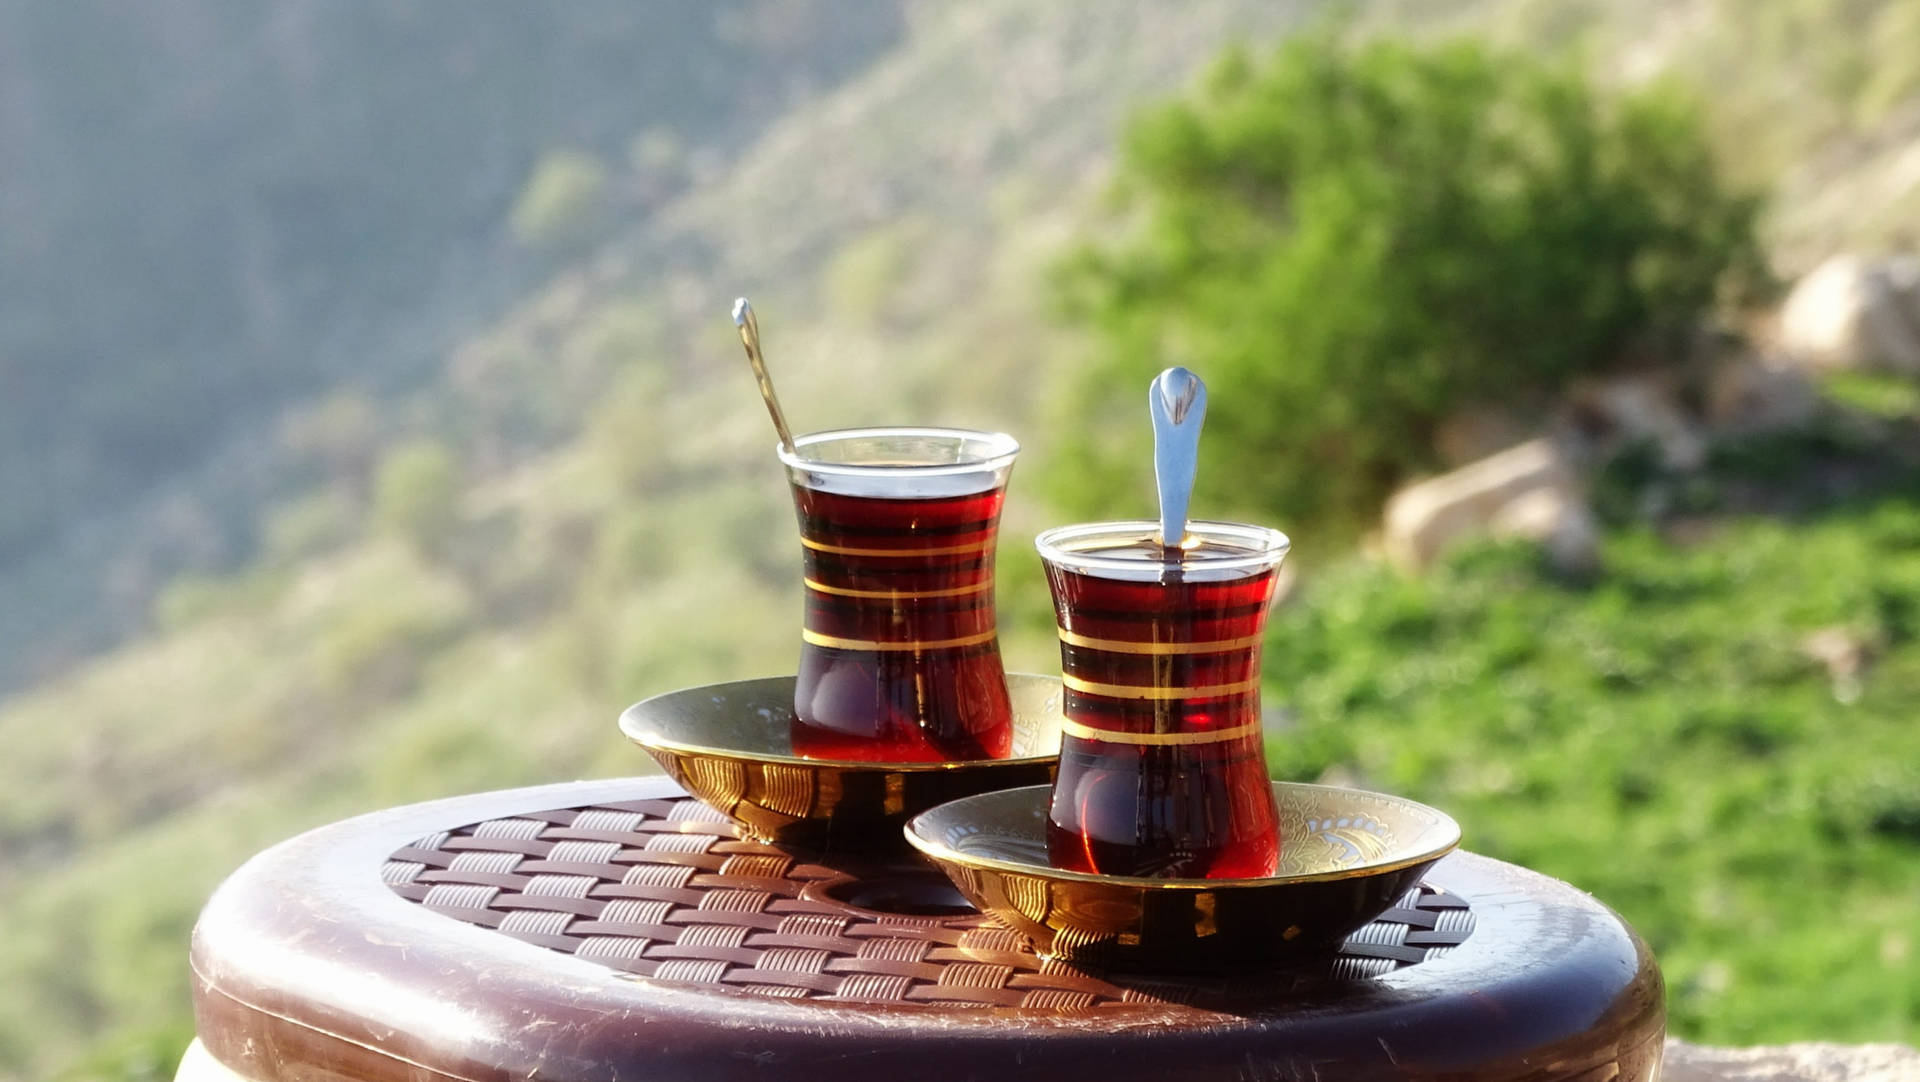 Iraq Kurdistan Tea Background